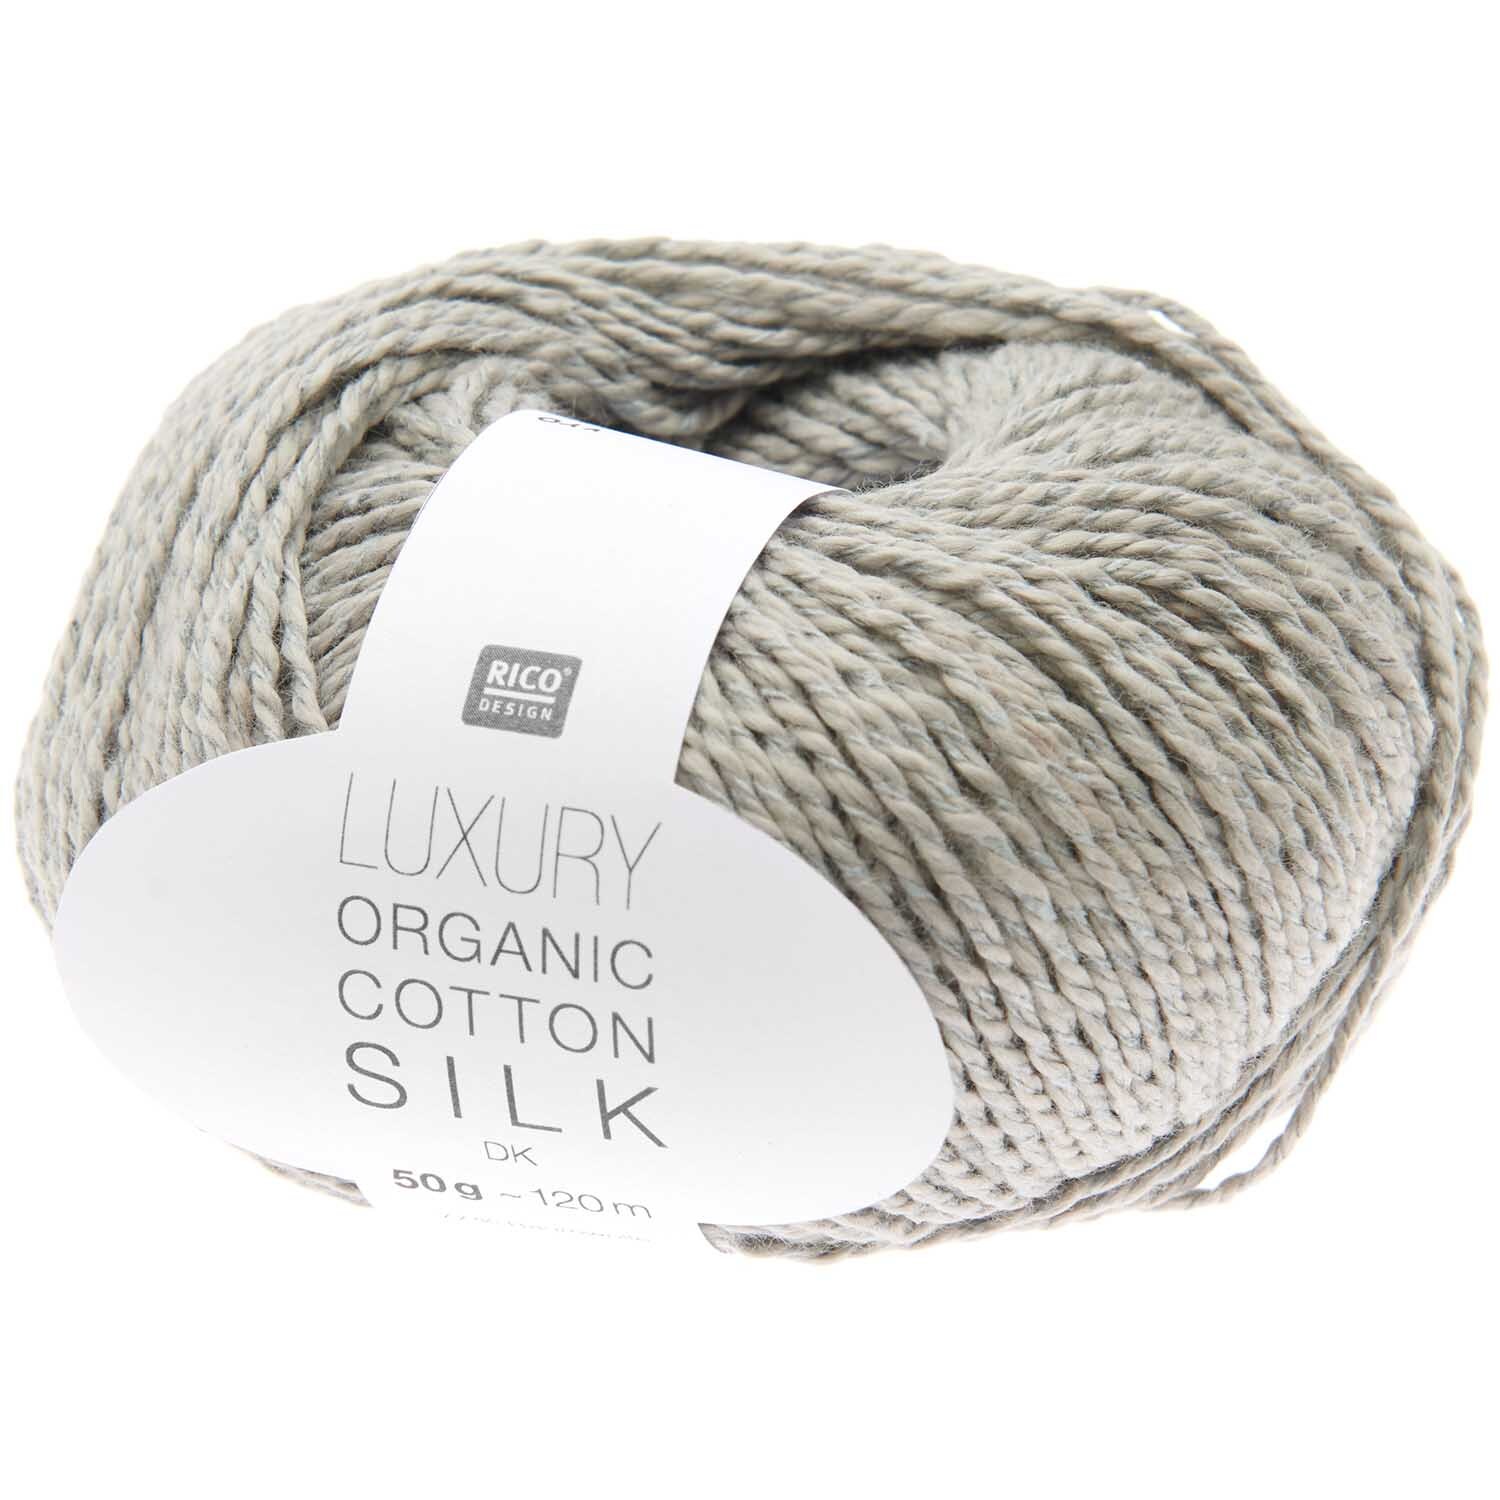 Luxury Organic Cotton Silk dk